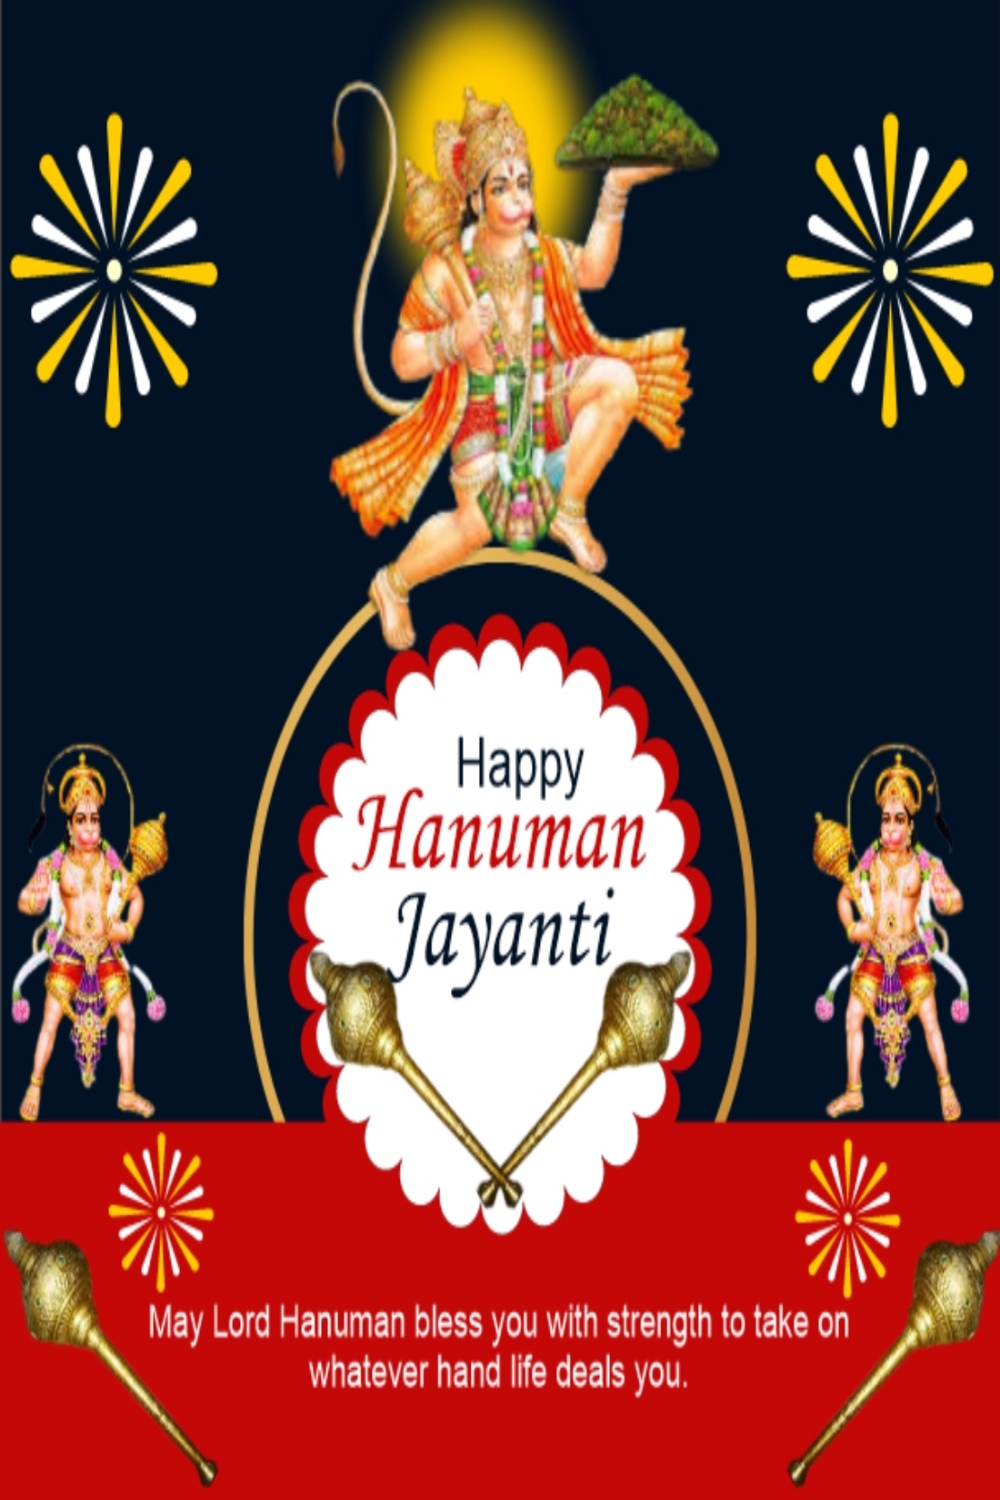 Hanuman Jayanti template pinterest preview image.